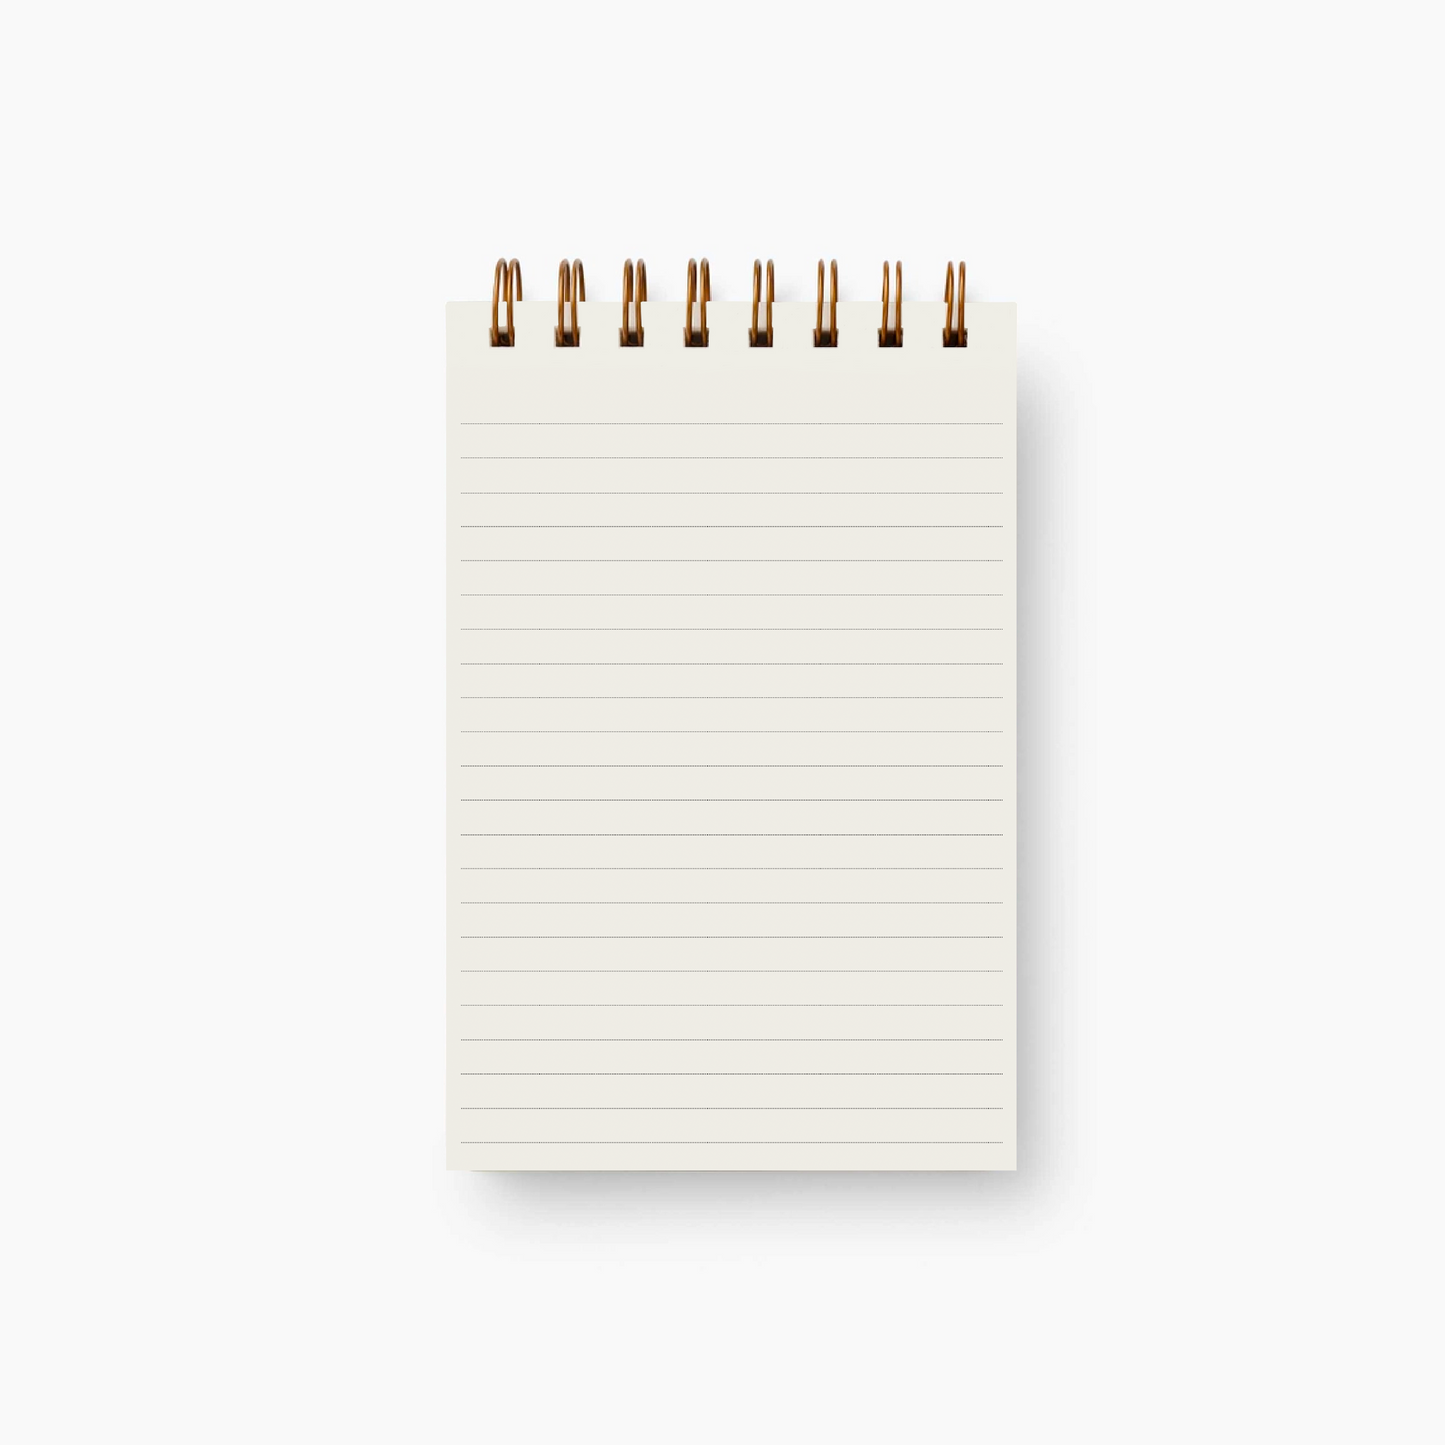 Marigold Mini Notebook